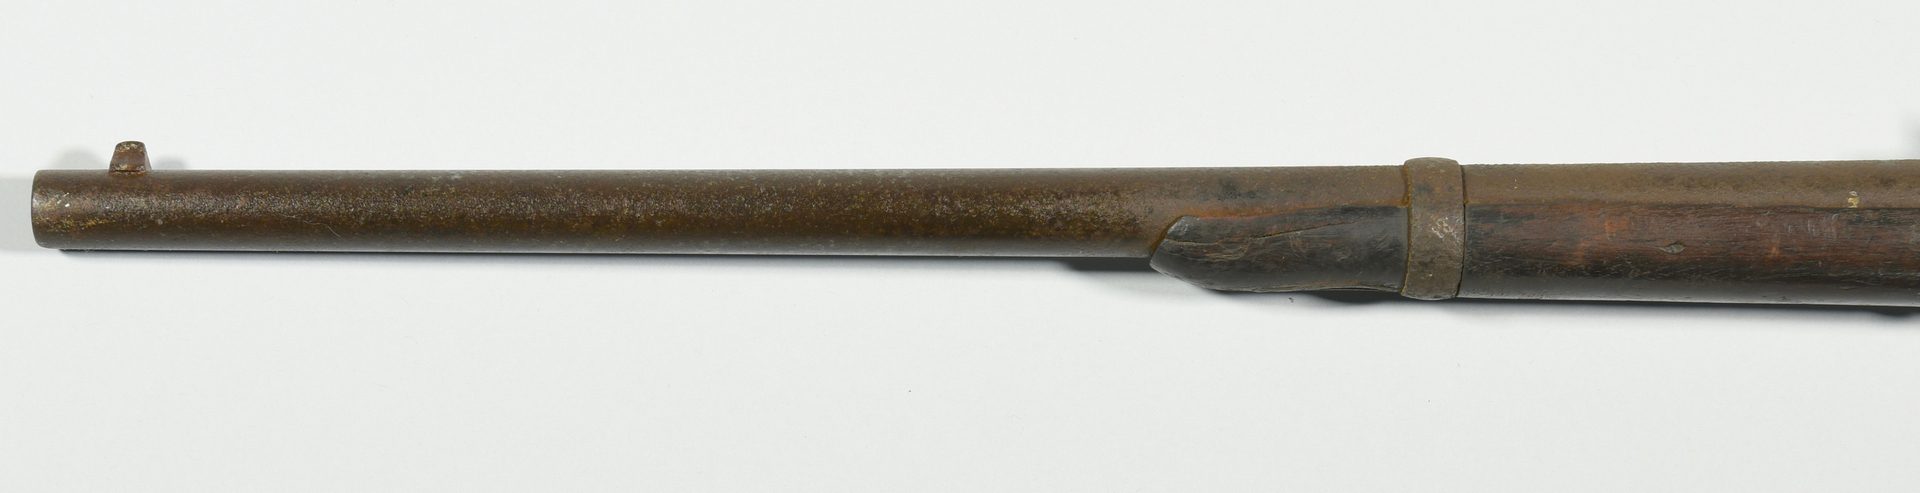 Lot 293: Burnside and Springfield Model 1861 Rifle, Devon Farm